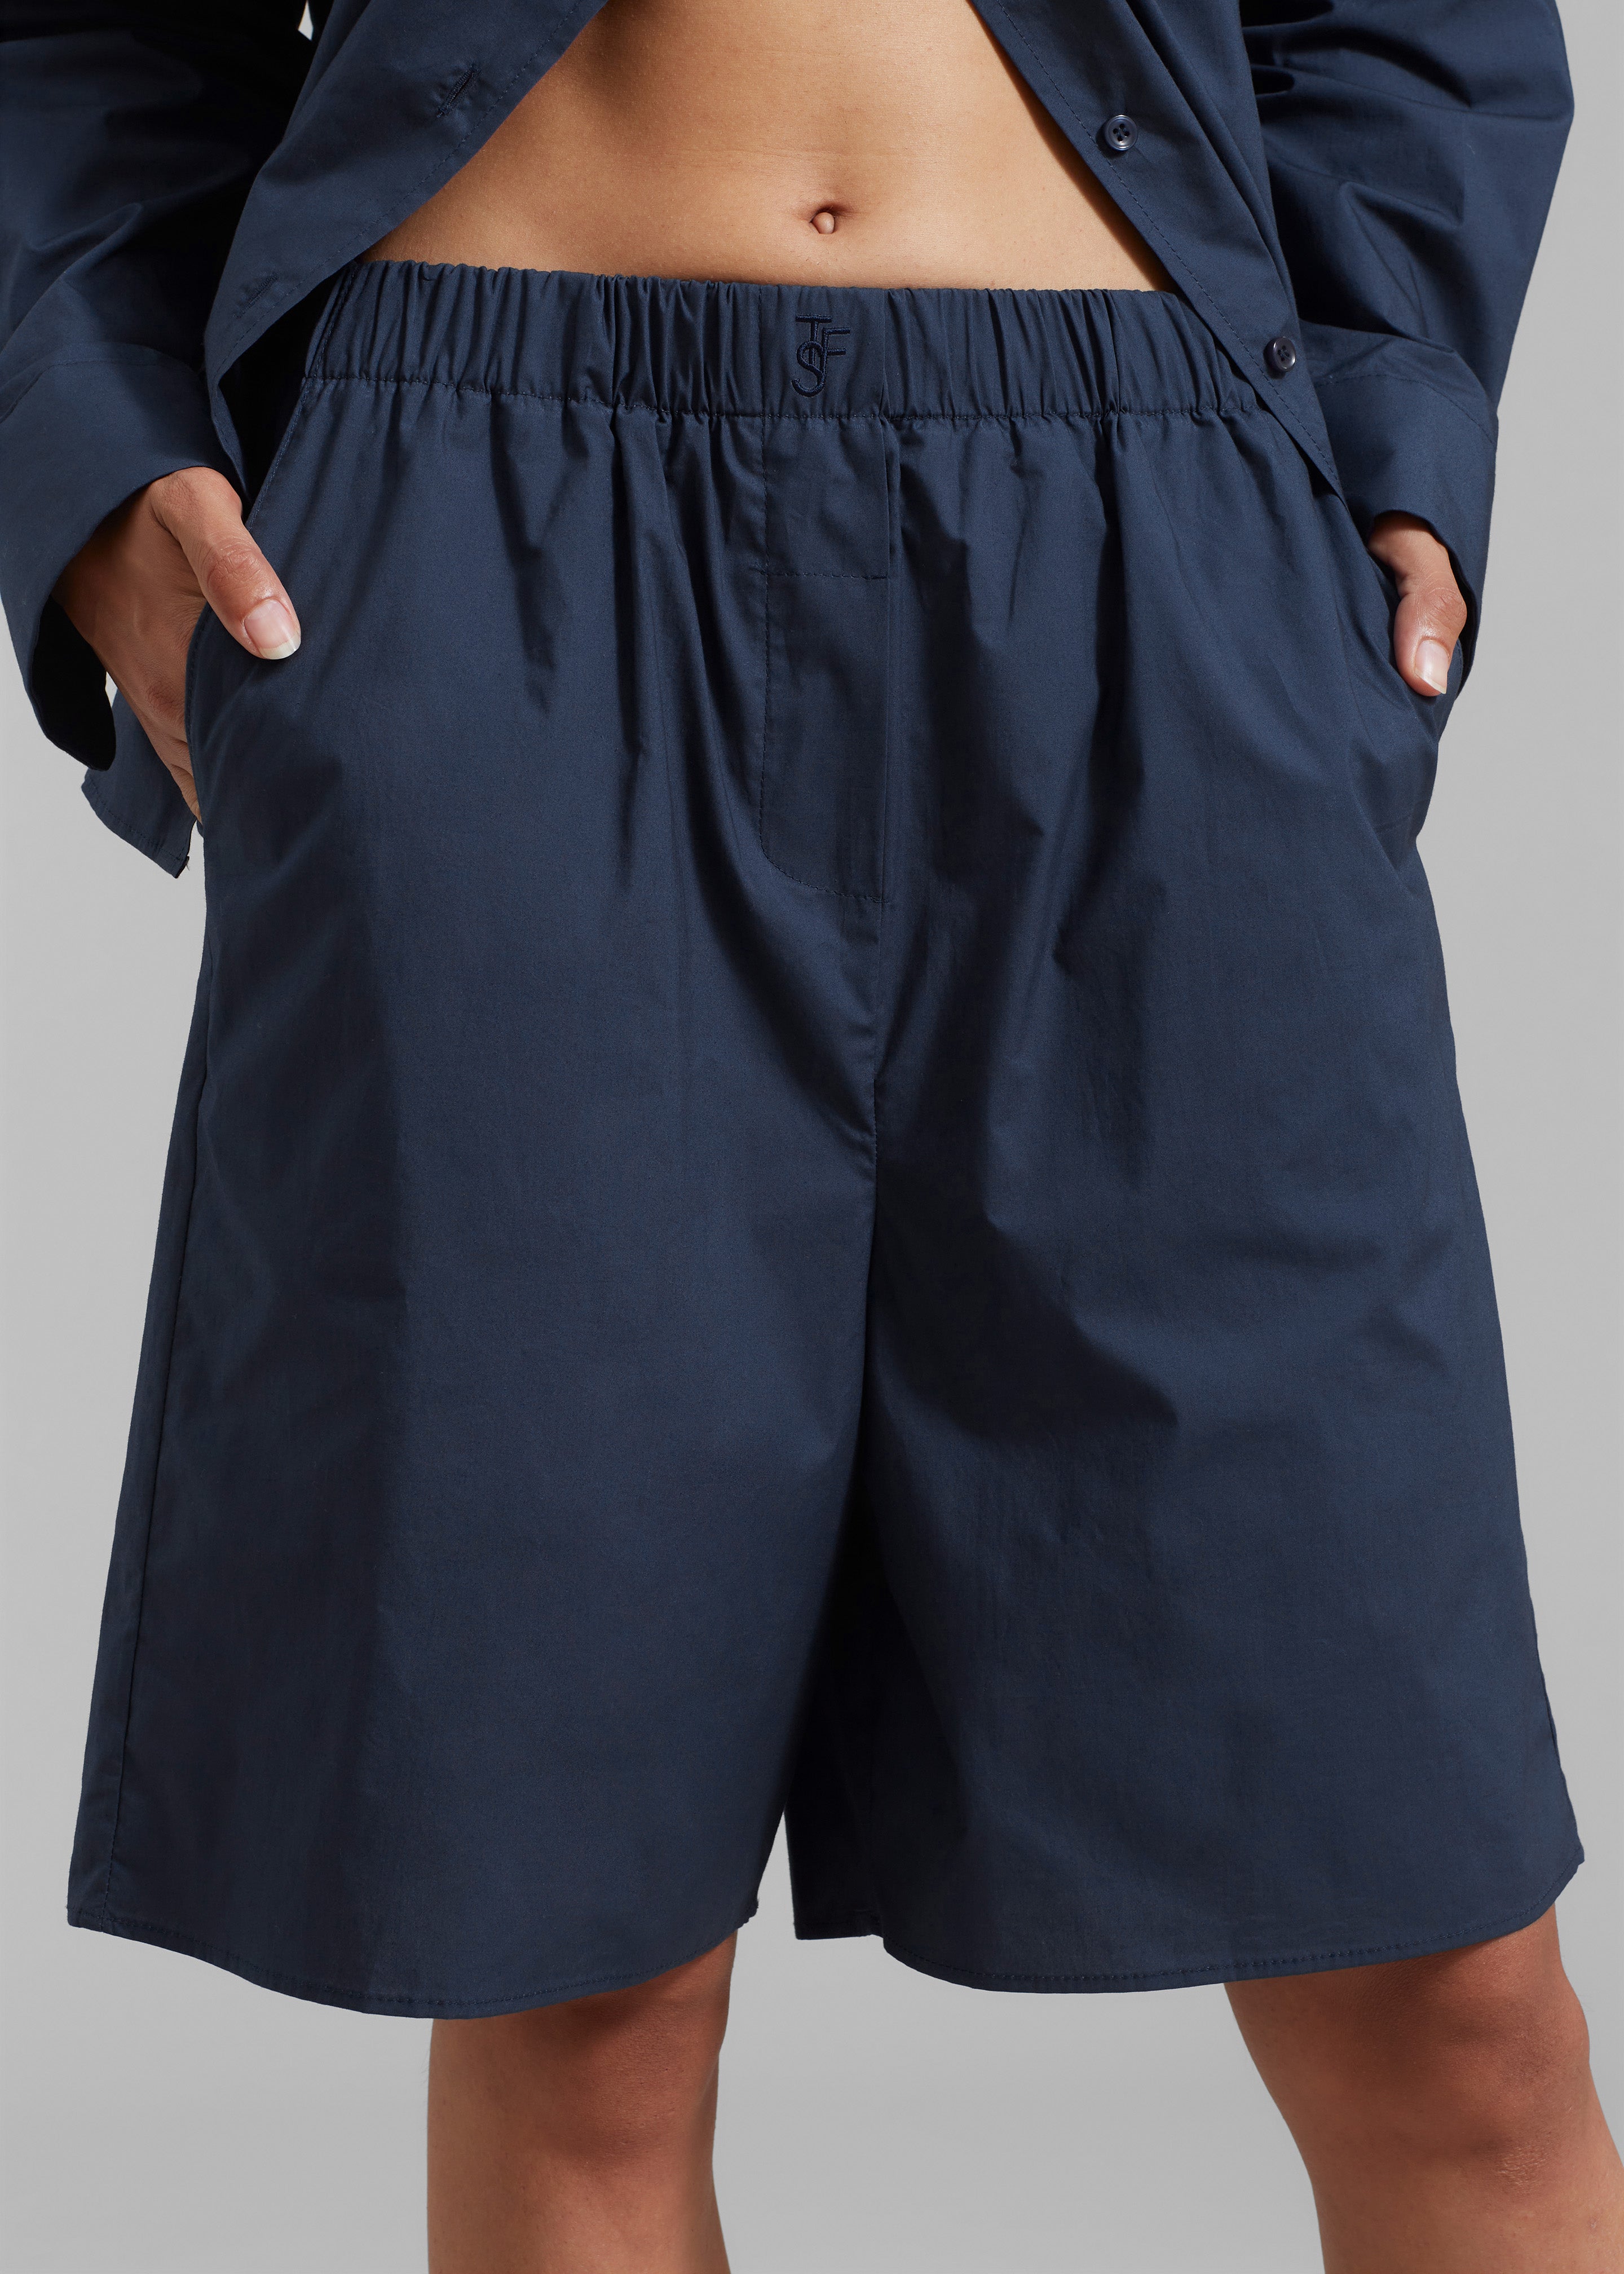 Levi Bermuda Shorts - Midnight Blue - 4